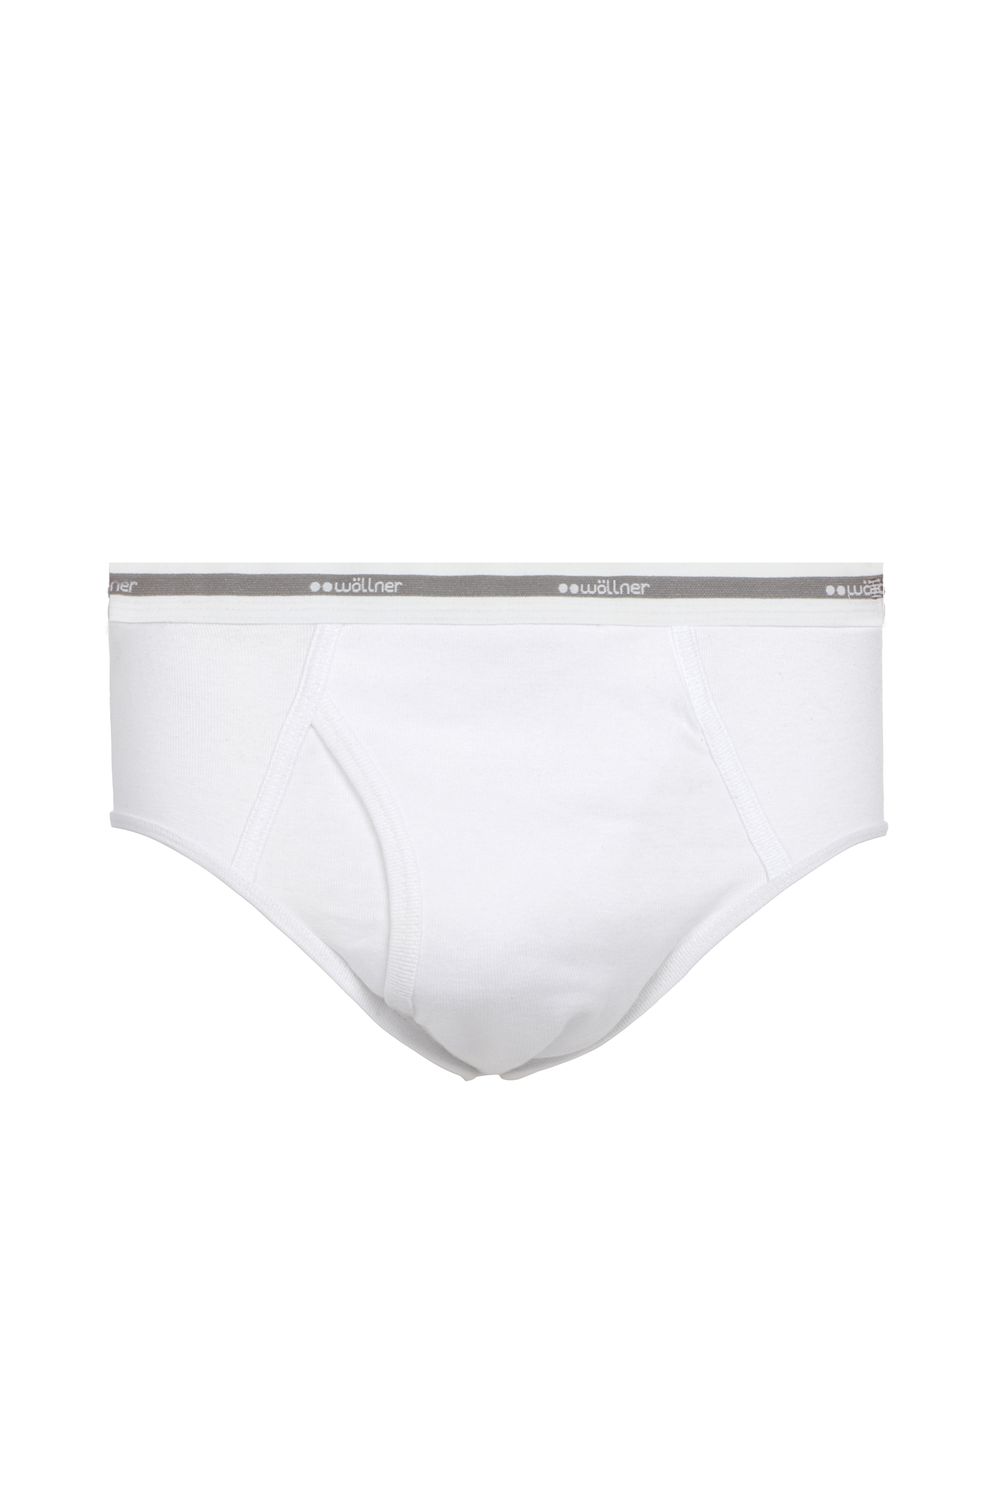 underwear-basico-branco-1